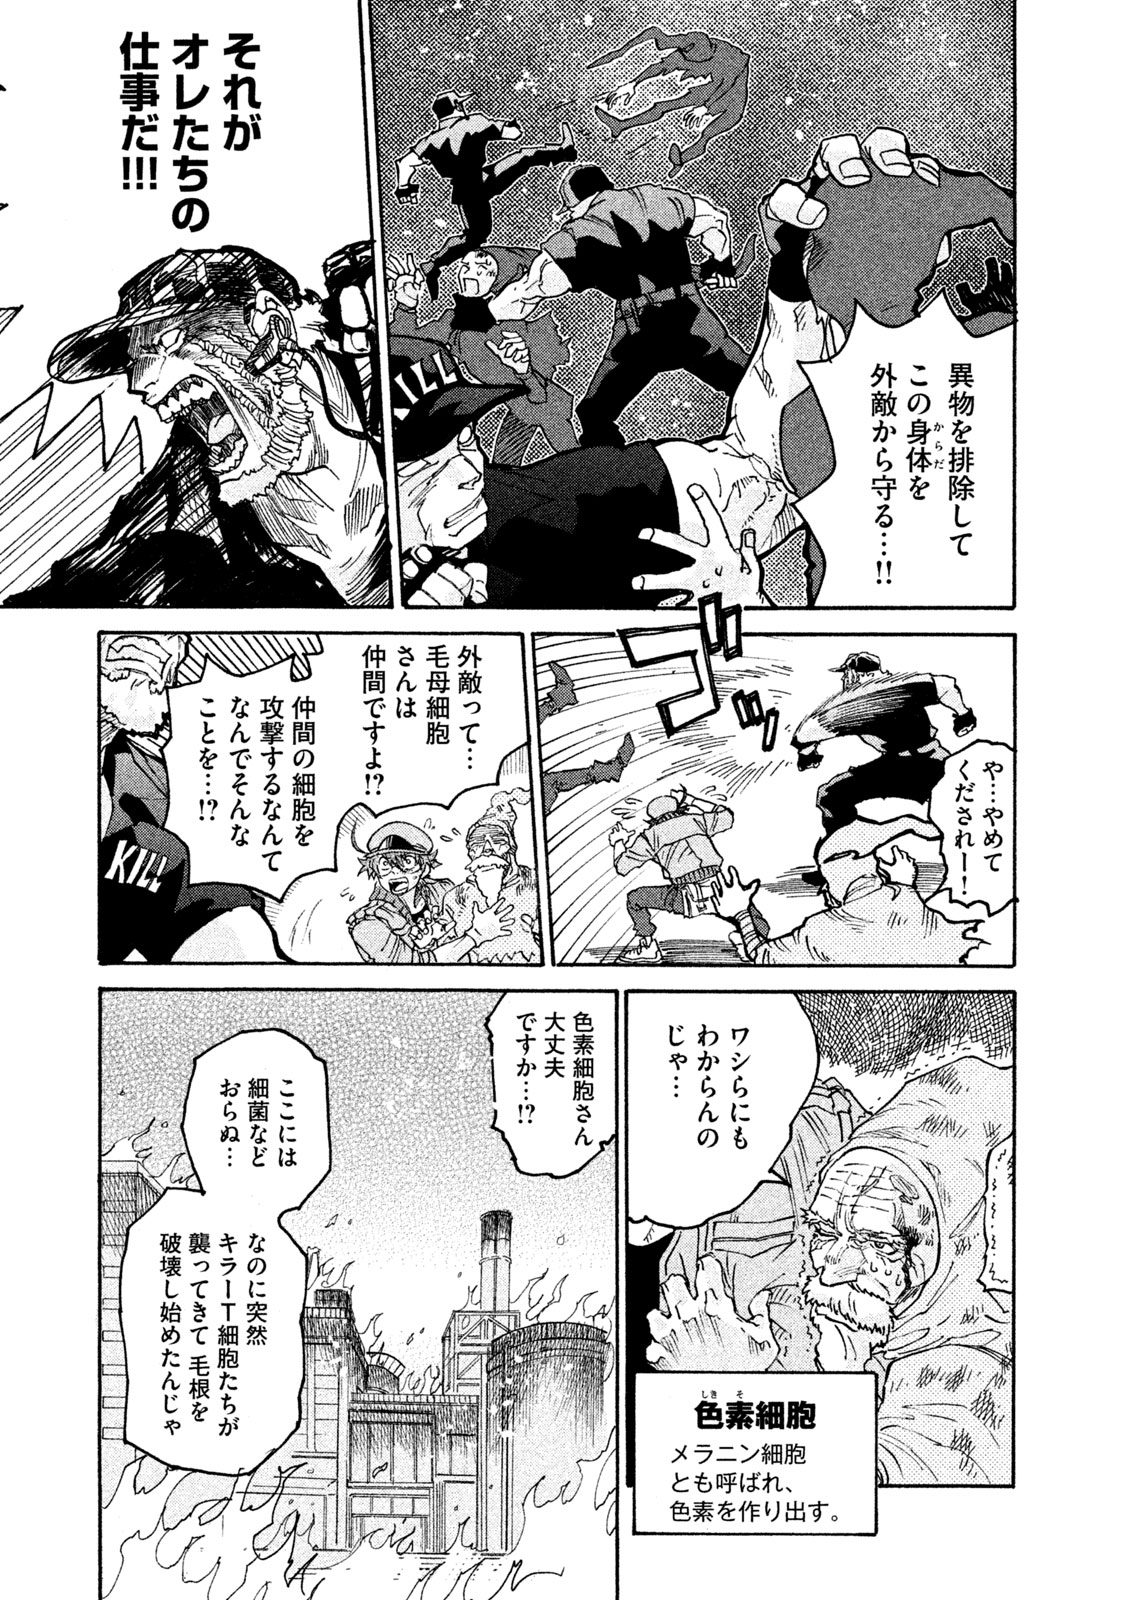 Hataraku Saibou BLACK - Chapter 5 - Page 11